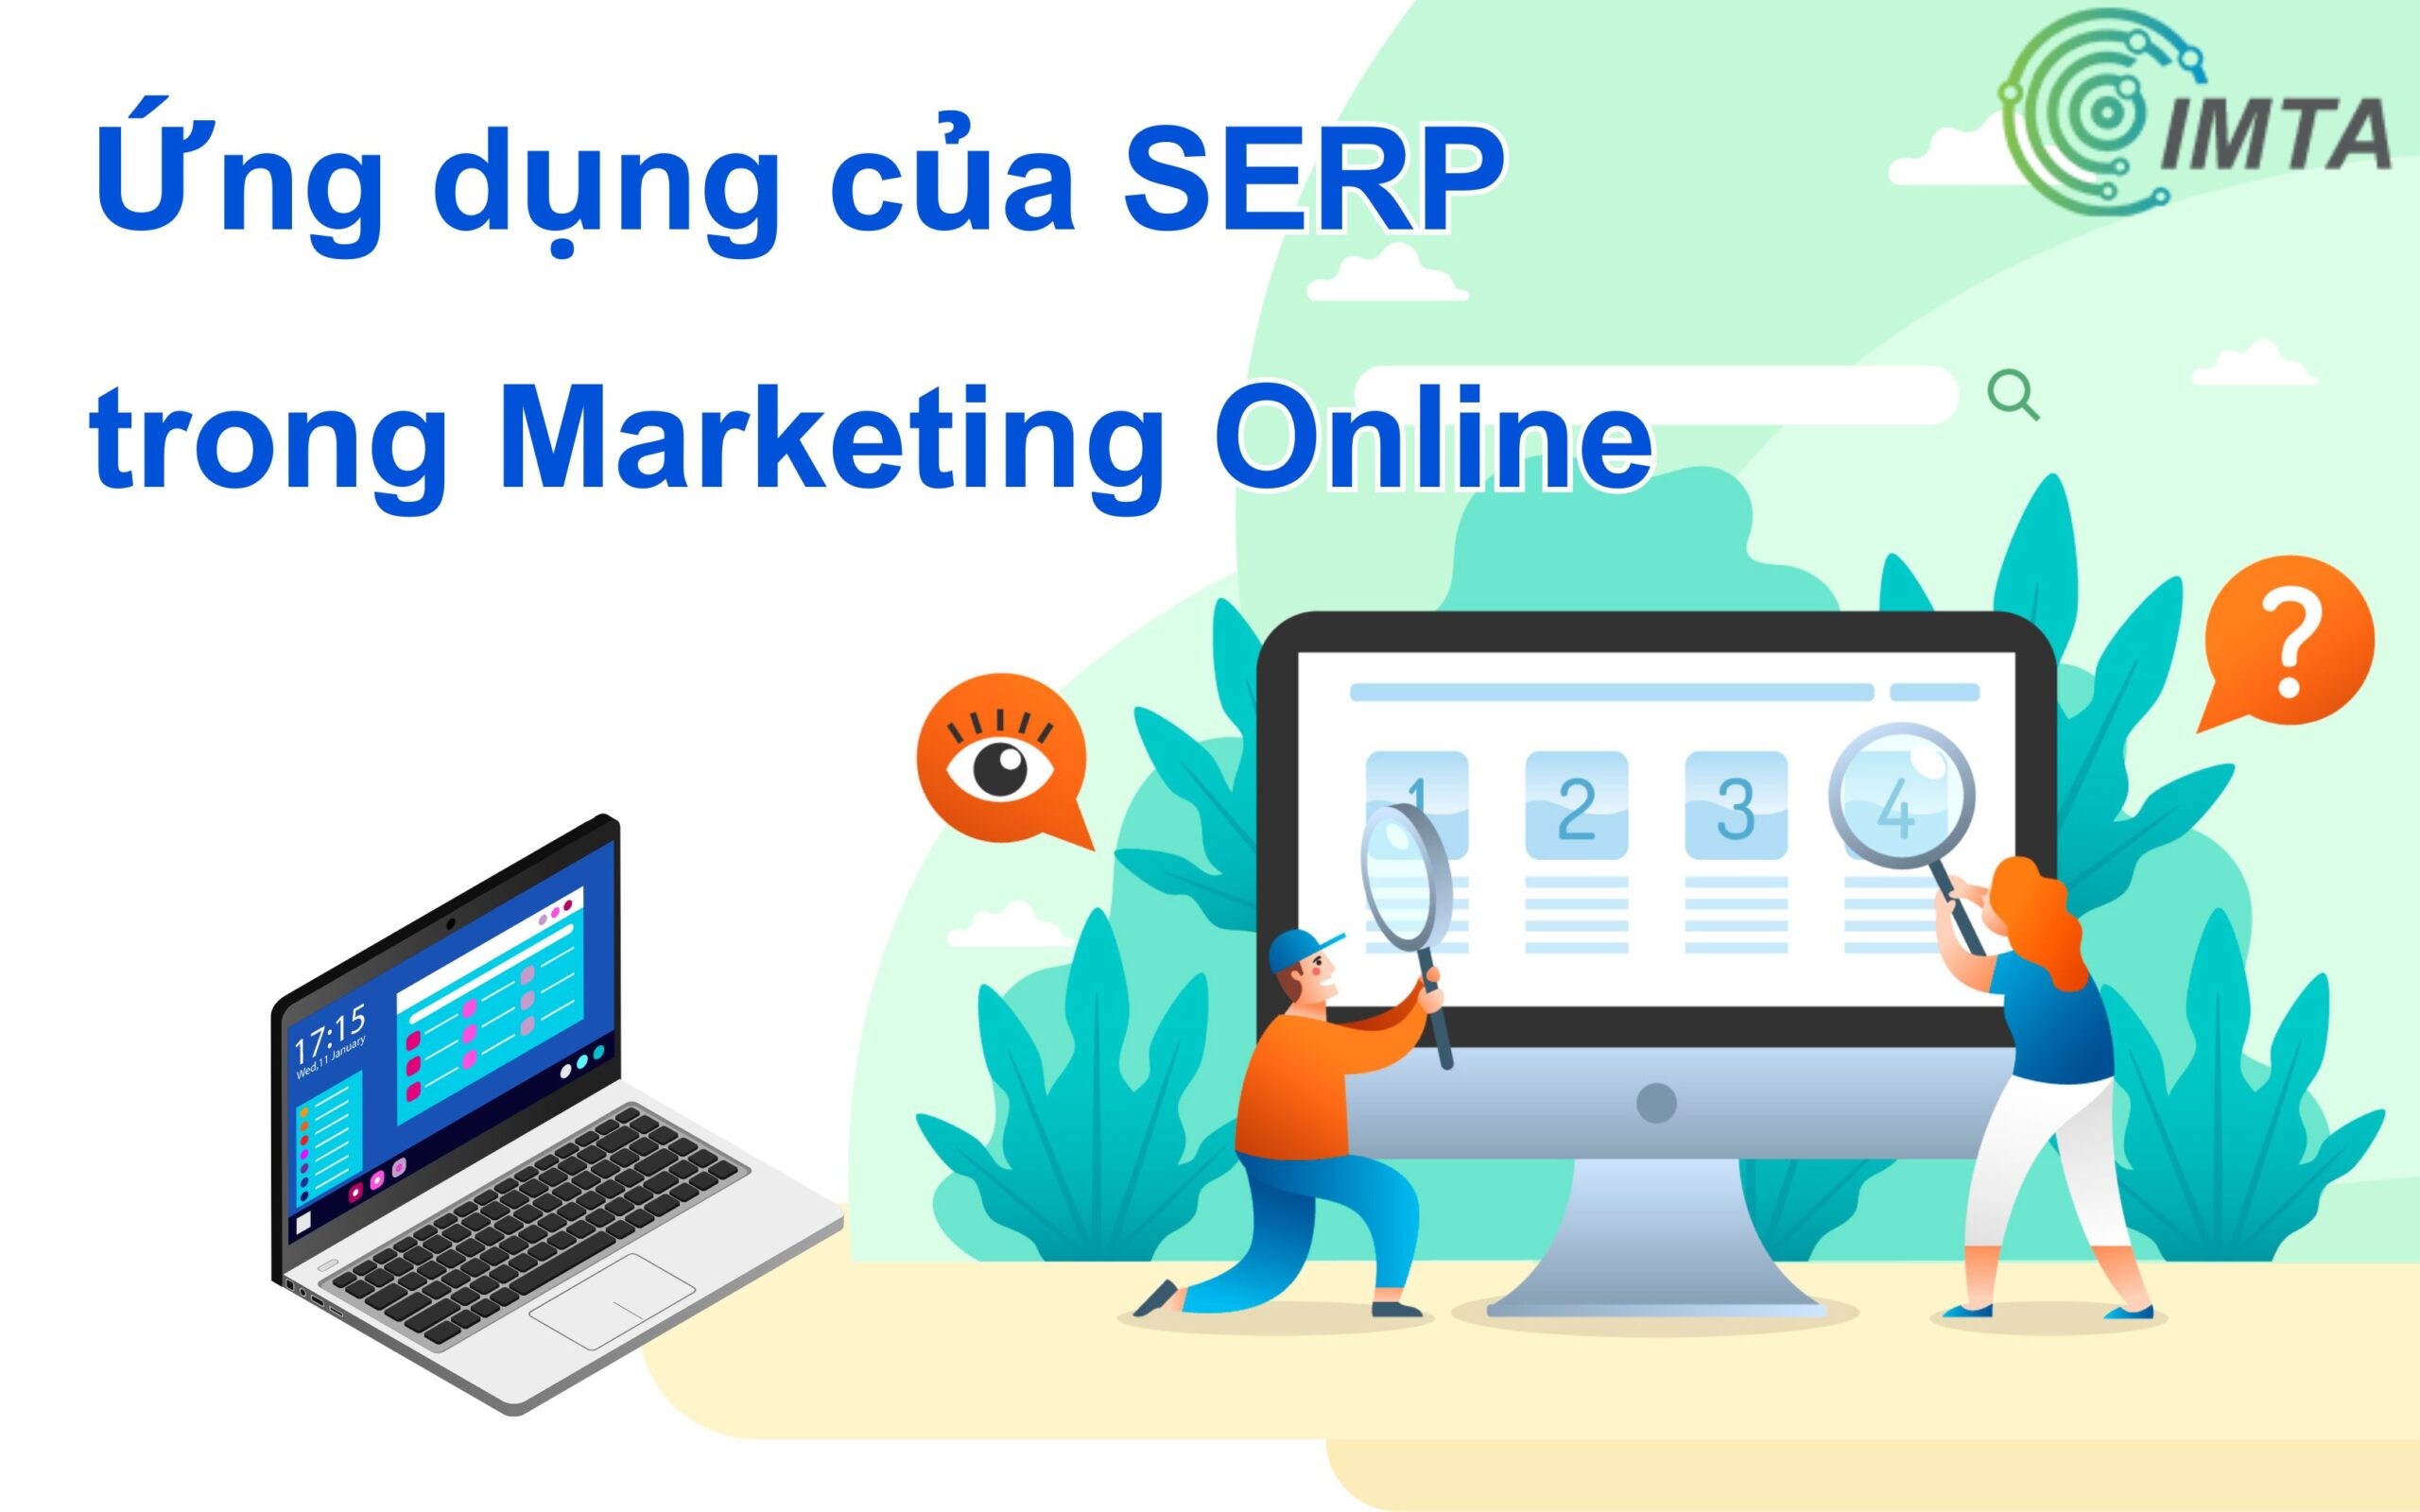 Ứng dụng của SERP trong Marketing Online